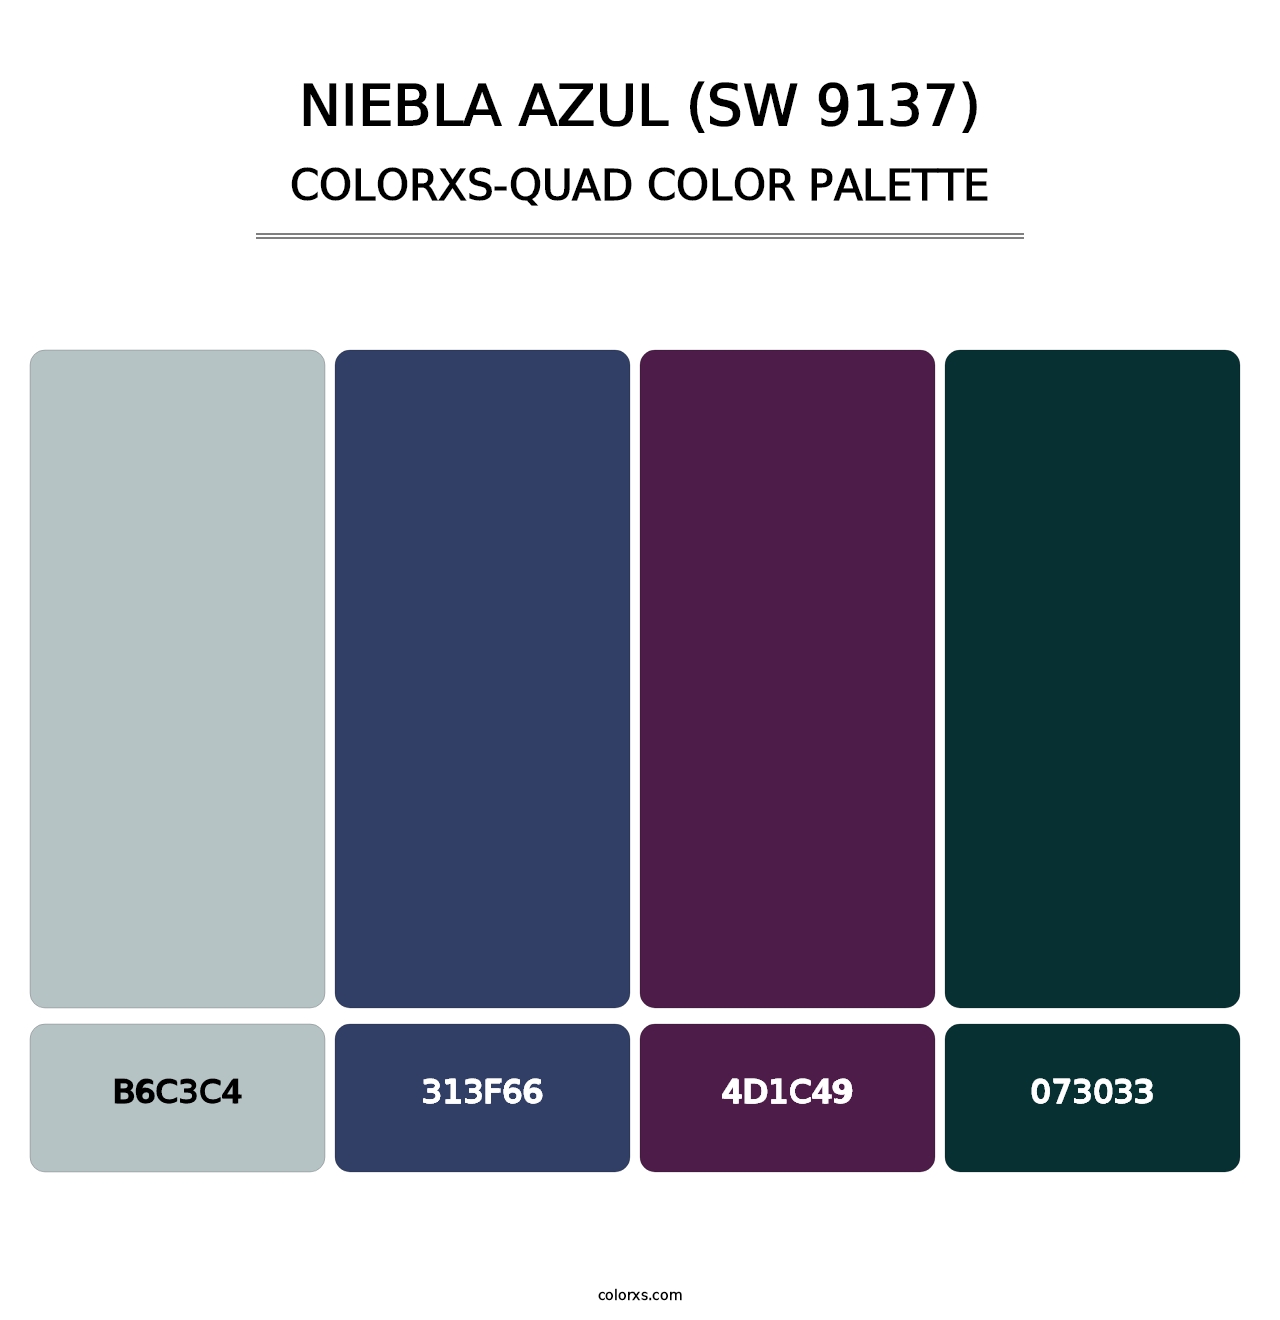 Niebla Azul (SW 9137) - Colorxs Quad Palette